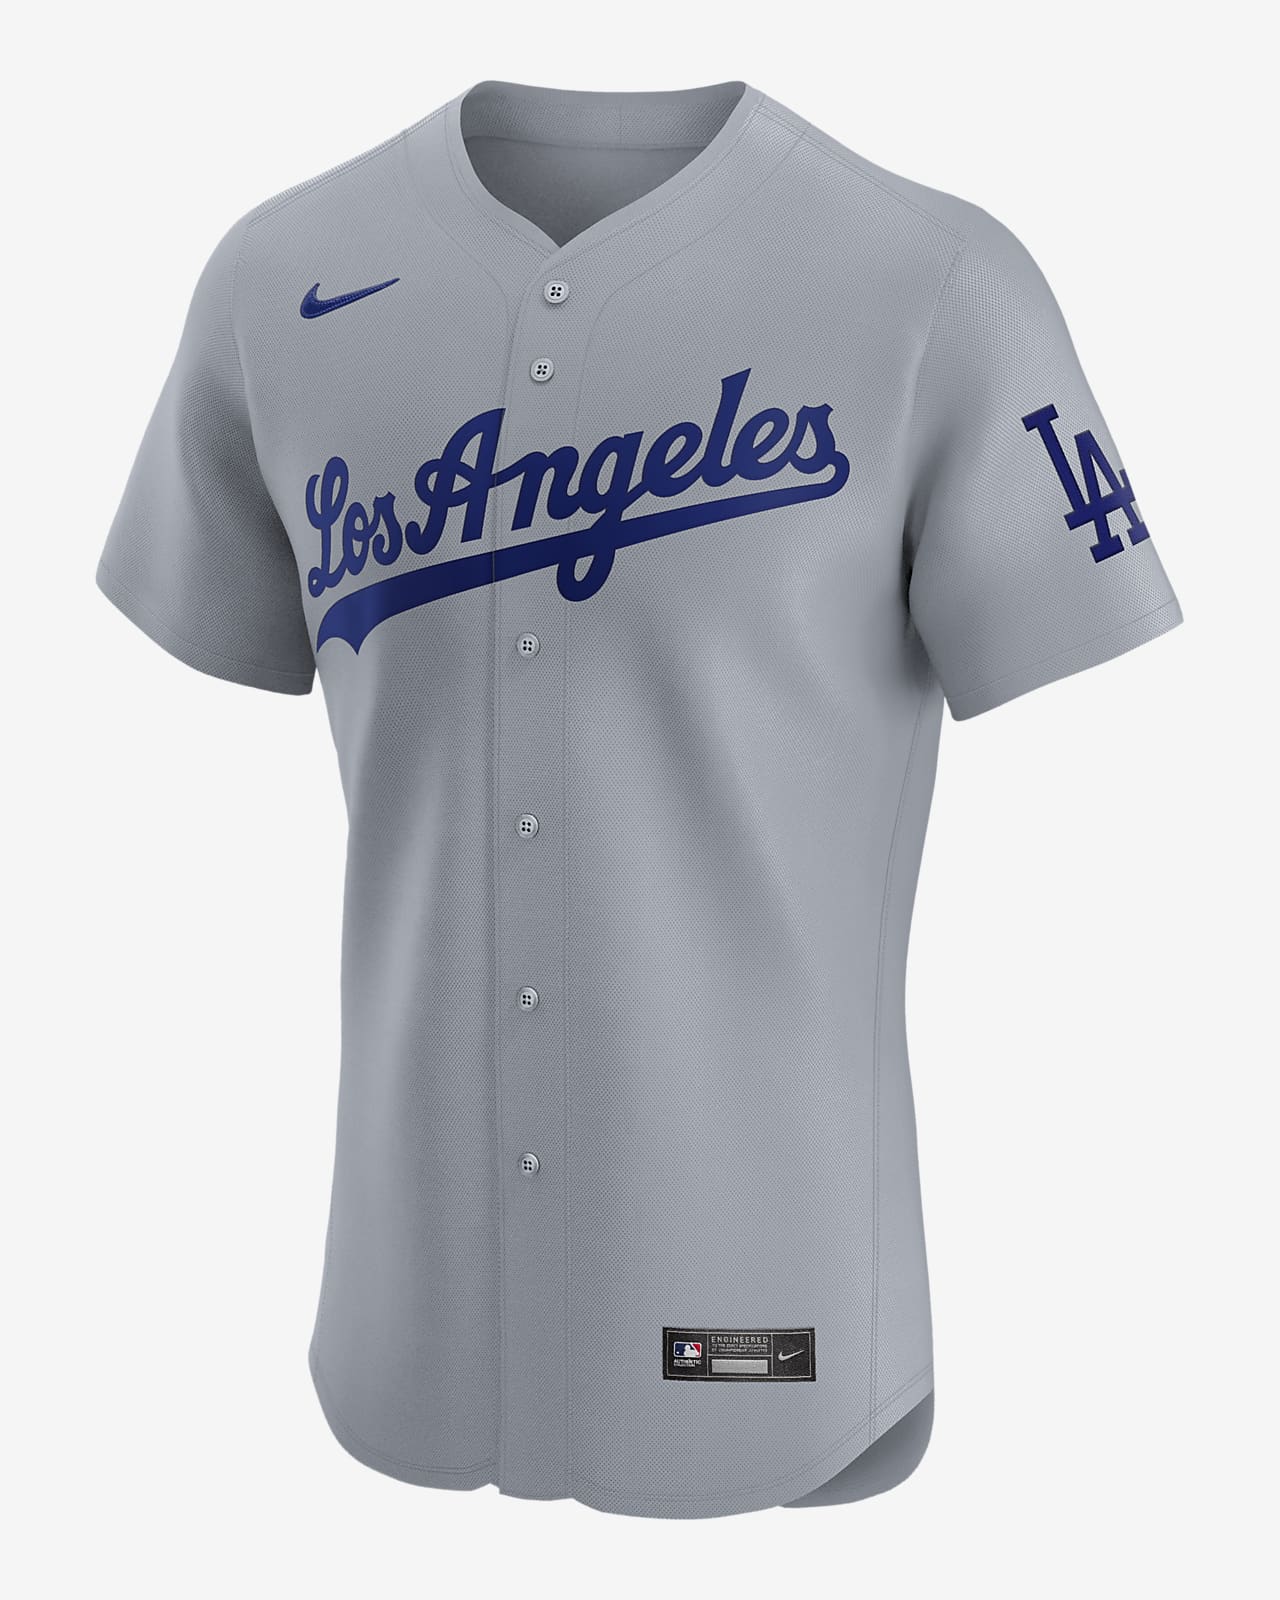 Jersey Nike Dri-FIT ADV de la MLB Elite para hombre Los Angeles Dodgers